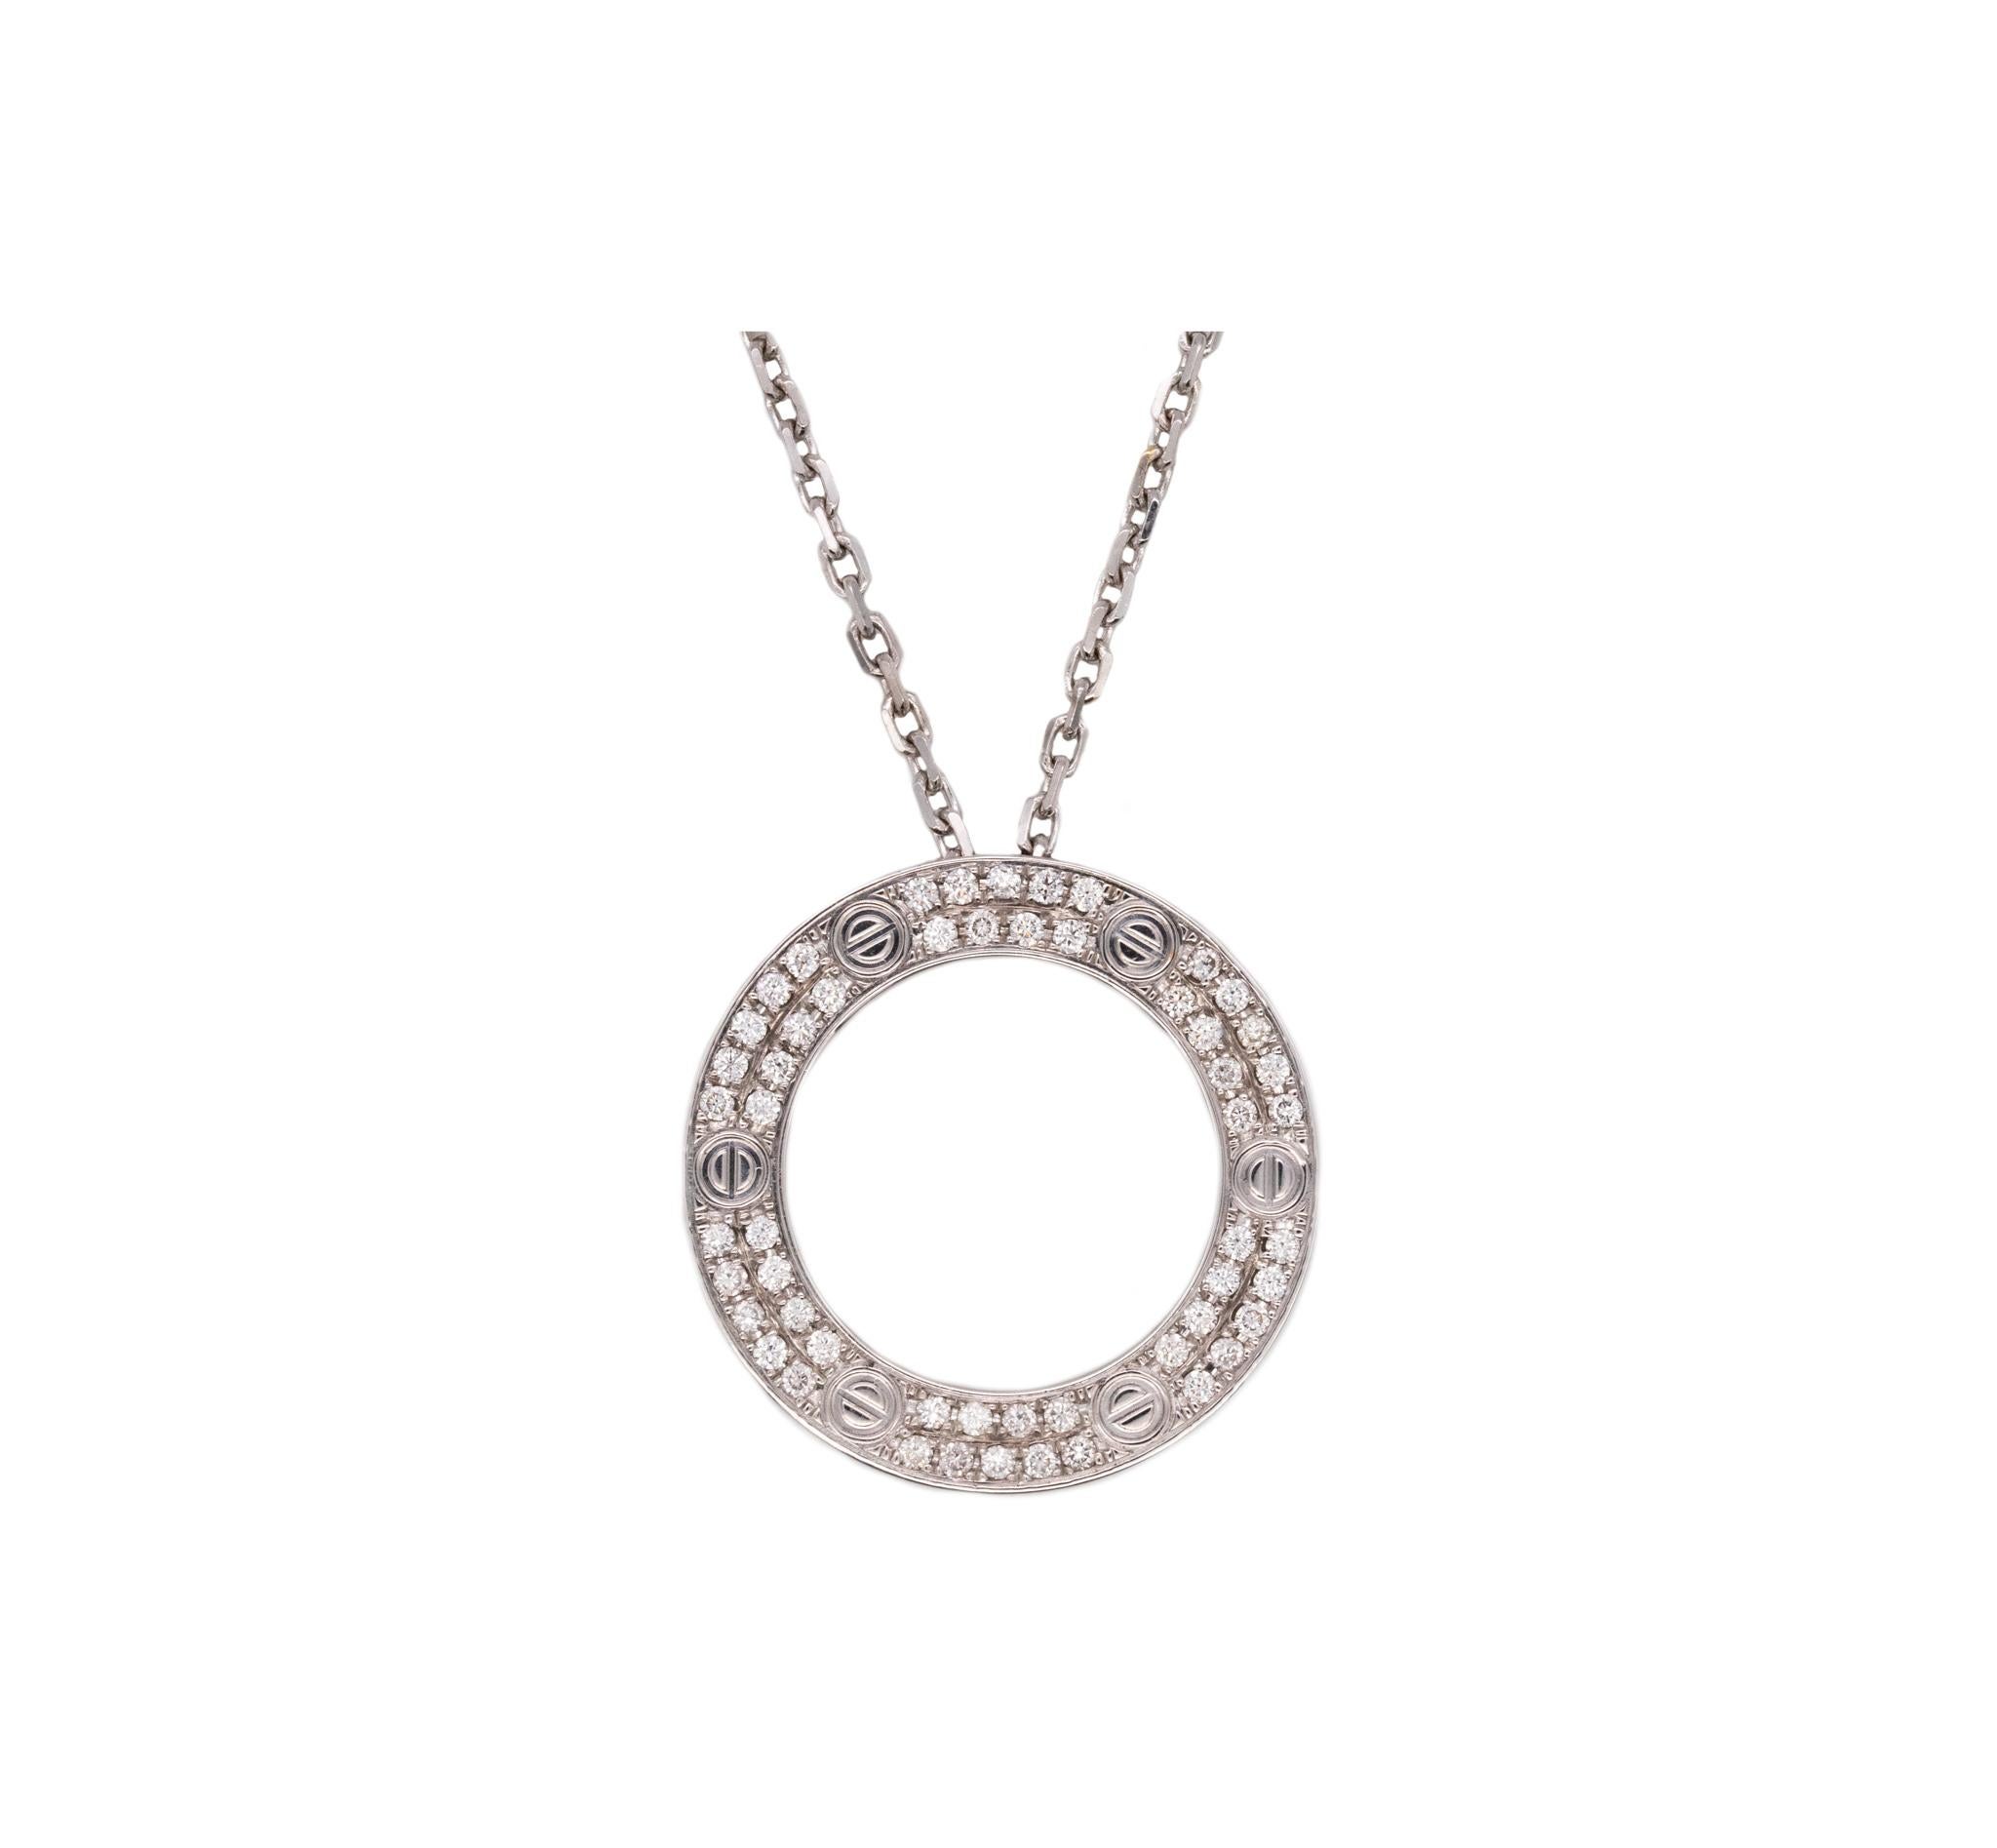 Cartier Paris Love Necklace Chain in 18Kt White Gold with 54 VVS Diamonds 3